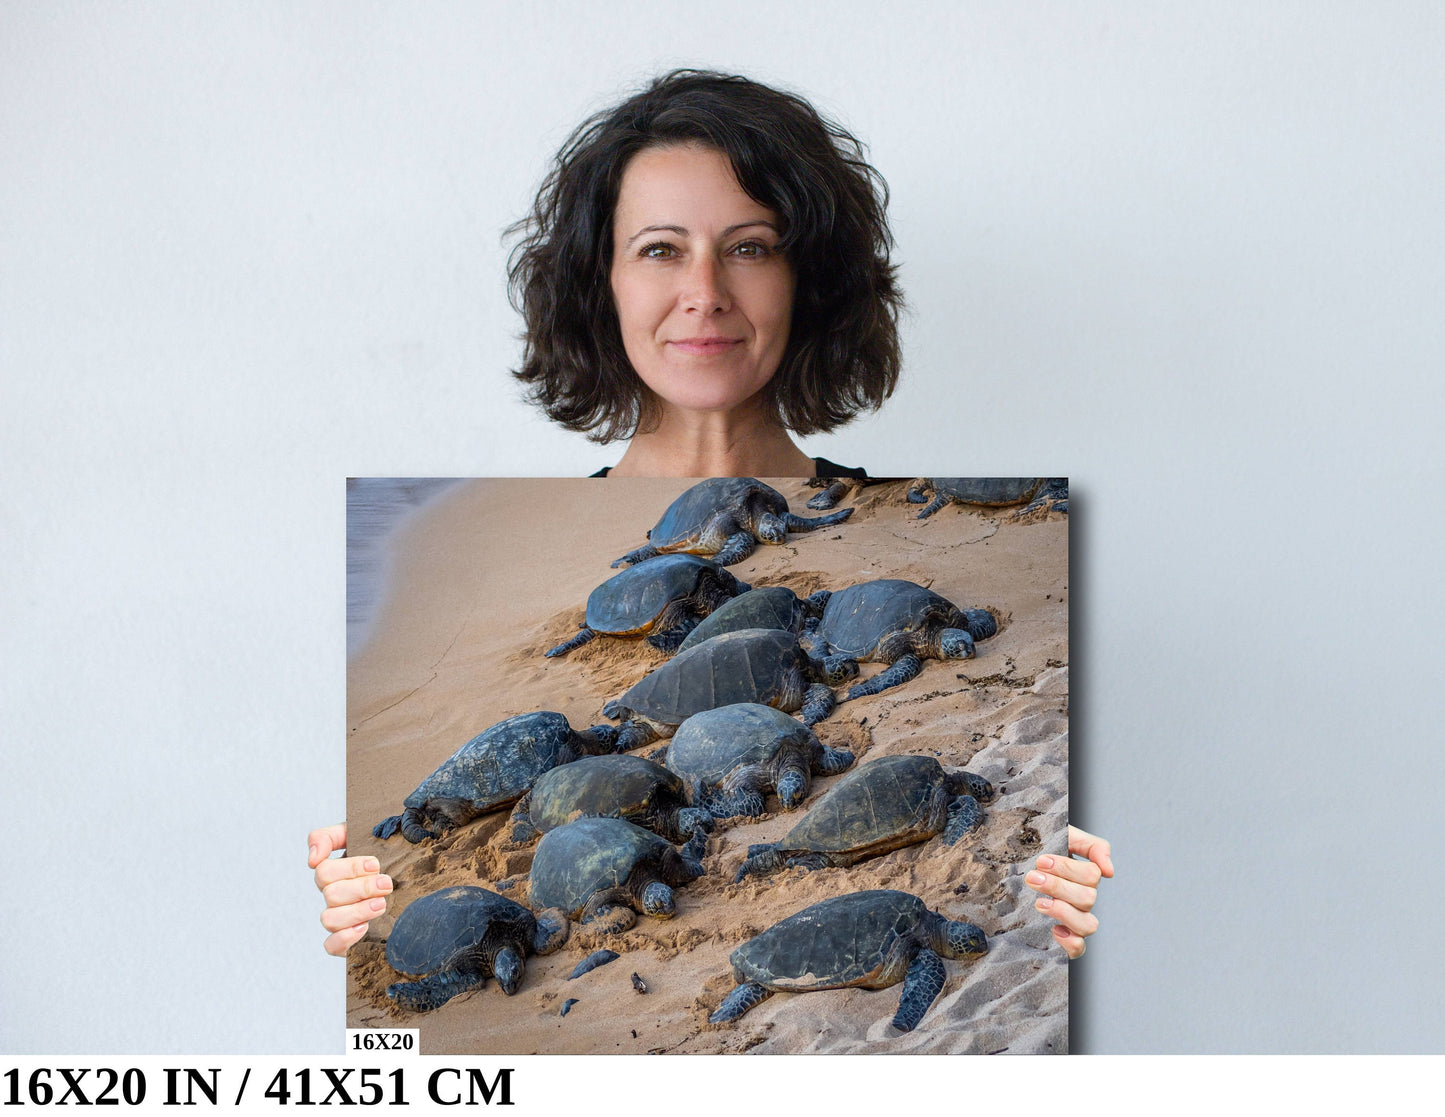 Bale of Turtles: Maui Hawaii Sea Turtles Photography Ocean Wildlife Wall Art Canvas Print